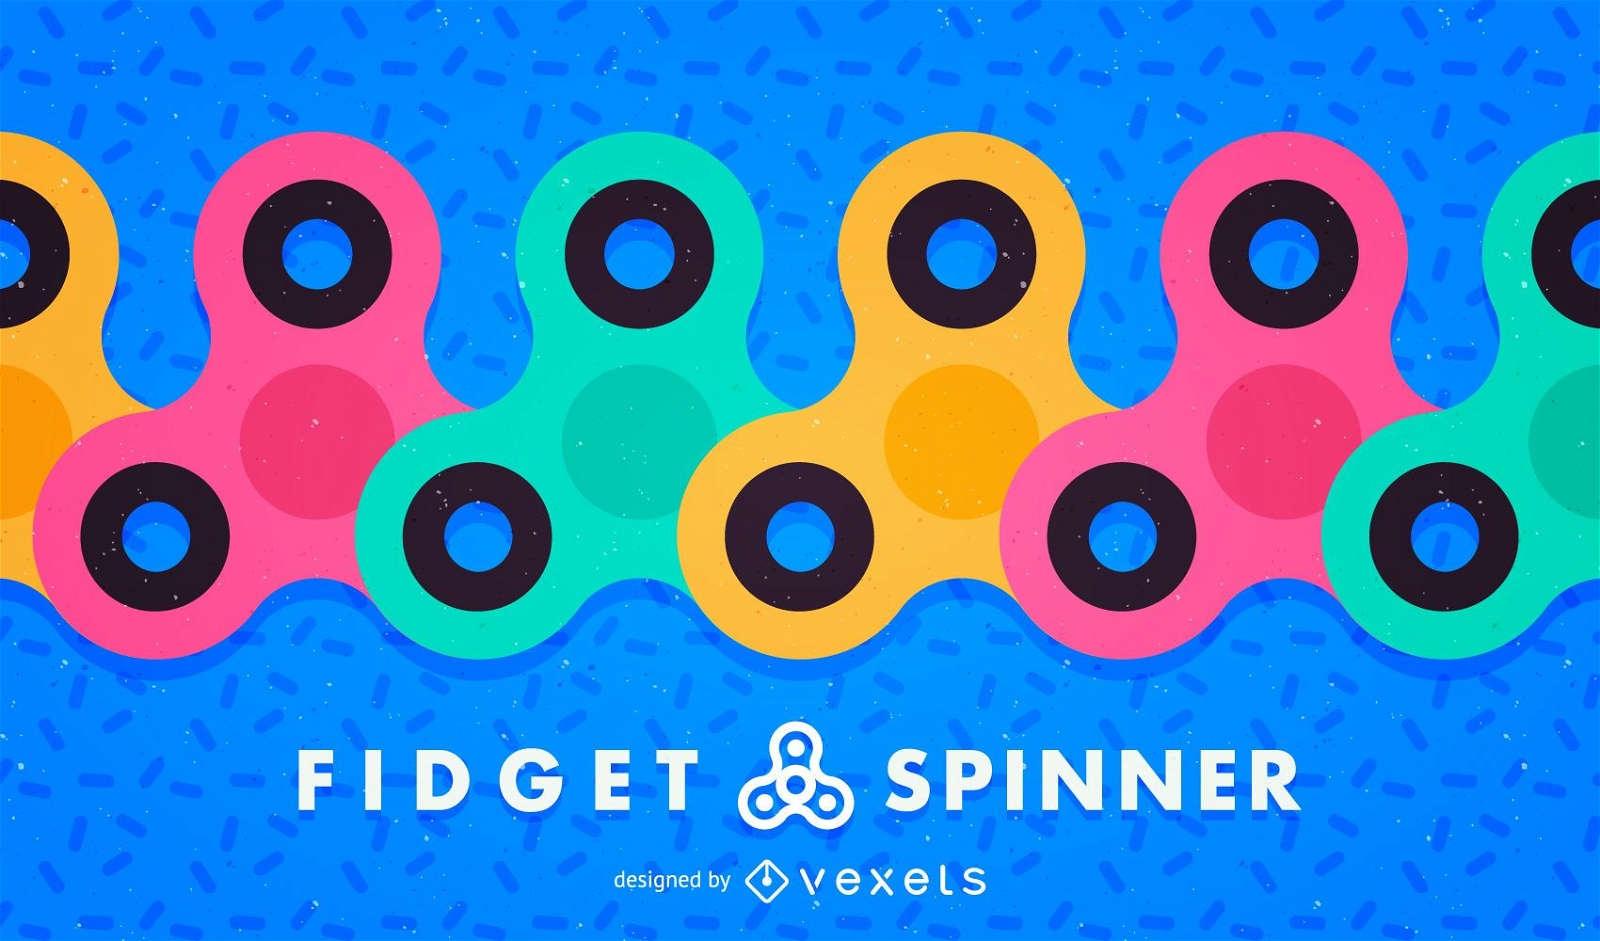 Fidget spinner illustrations background